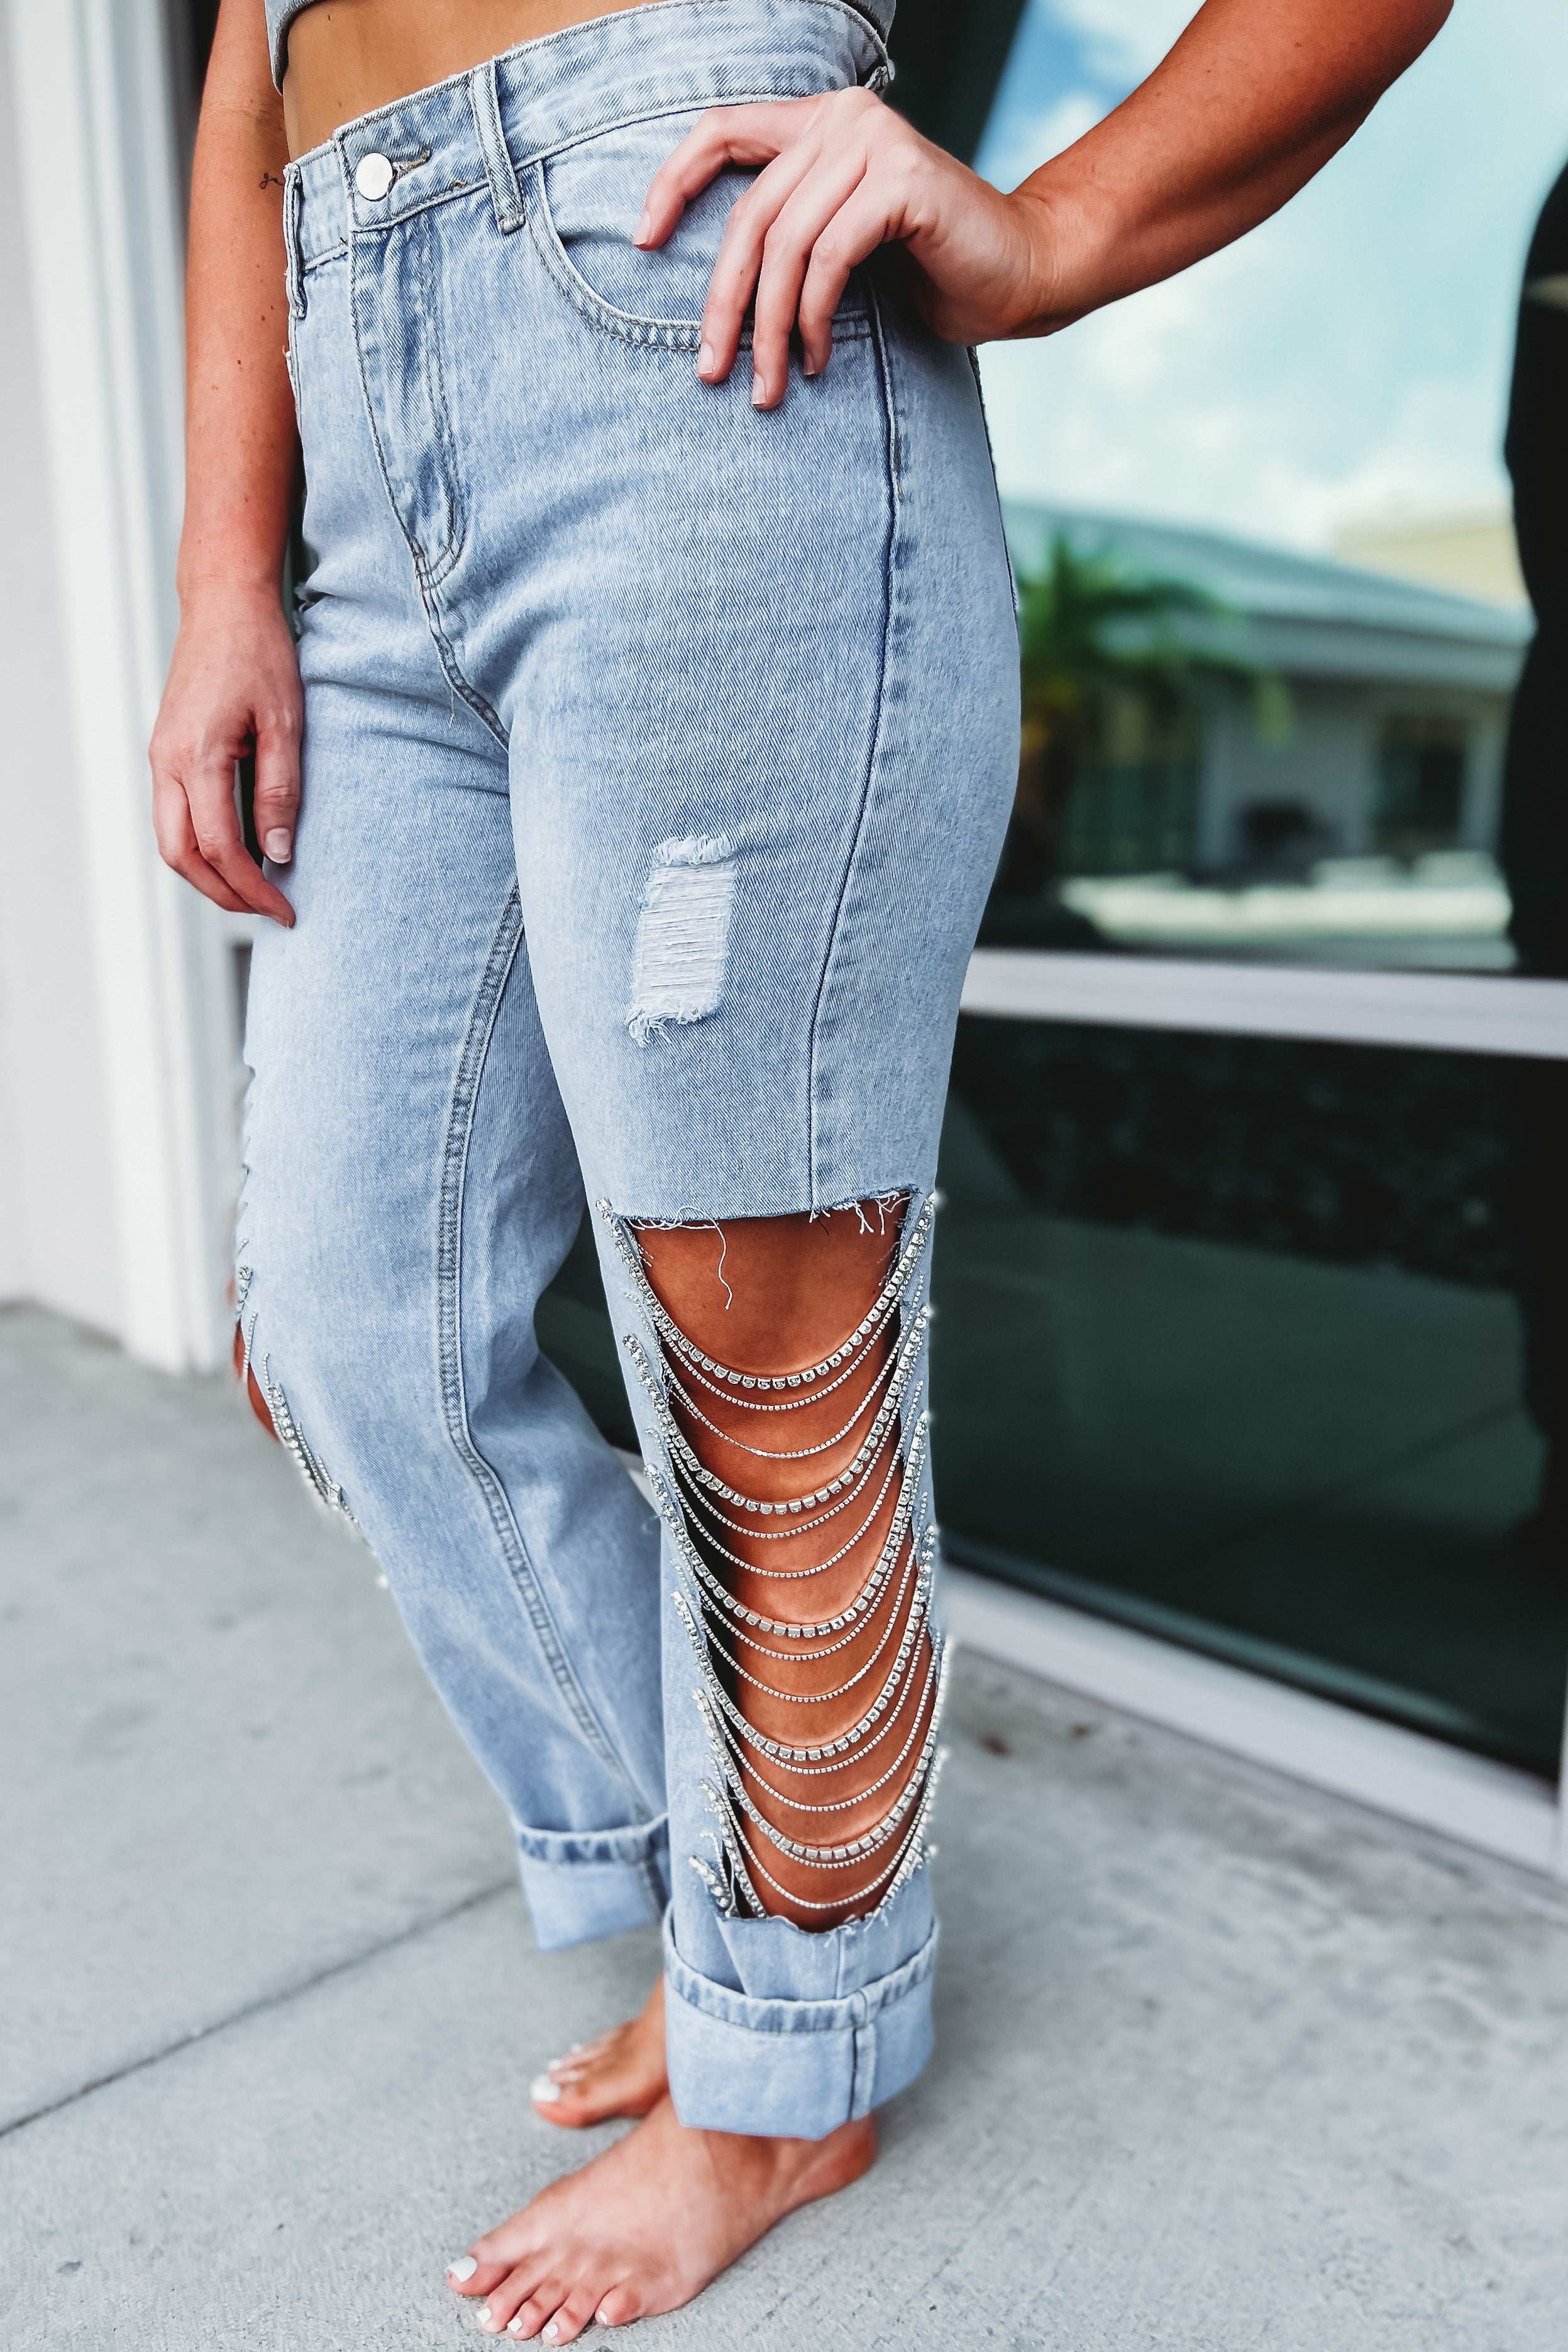 Rhinestone Embellished Jeans with Side Slit